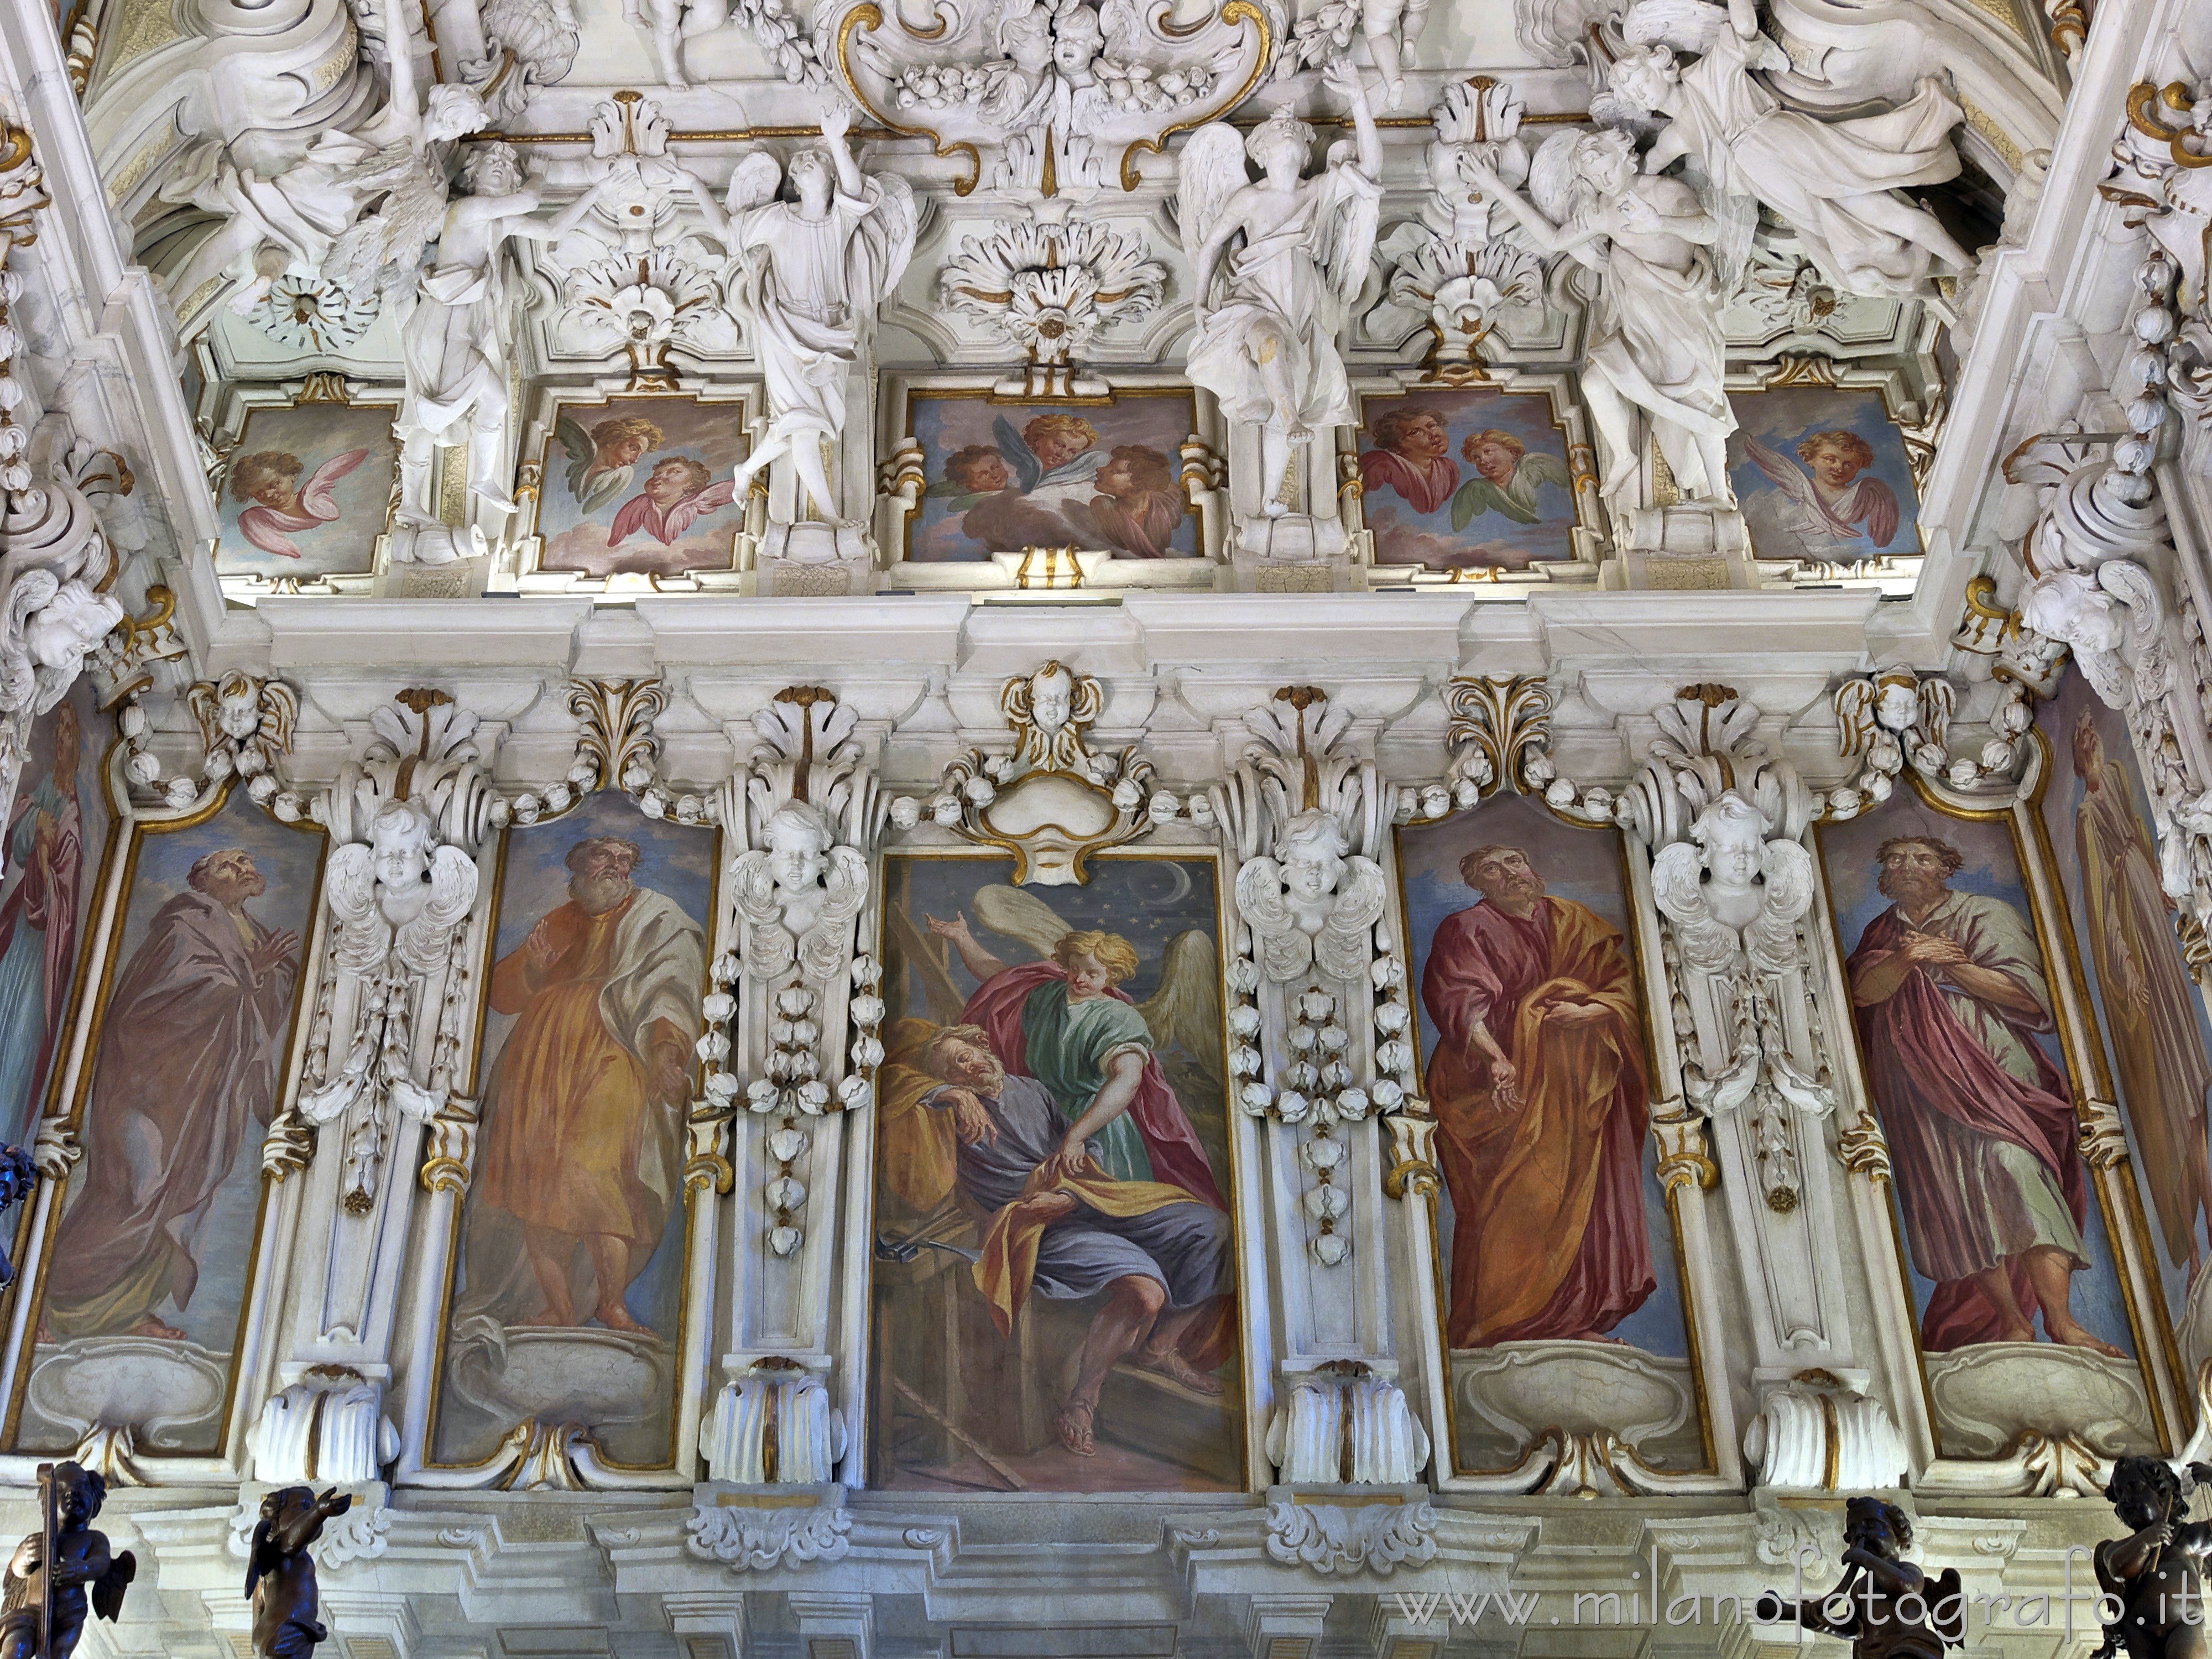 Caravaggio (Bergamo, Italy): Decorated wall of the sacristy of the Sanctuary of Caravaggio - Caravaggio (Bergamo, Italy)